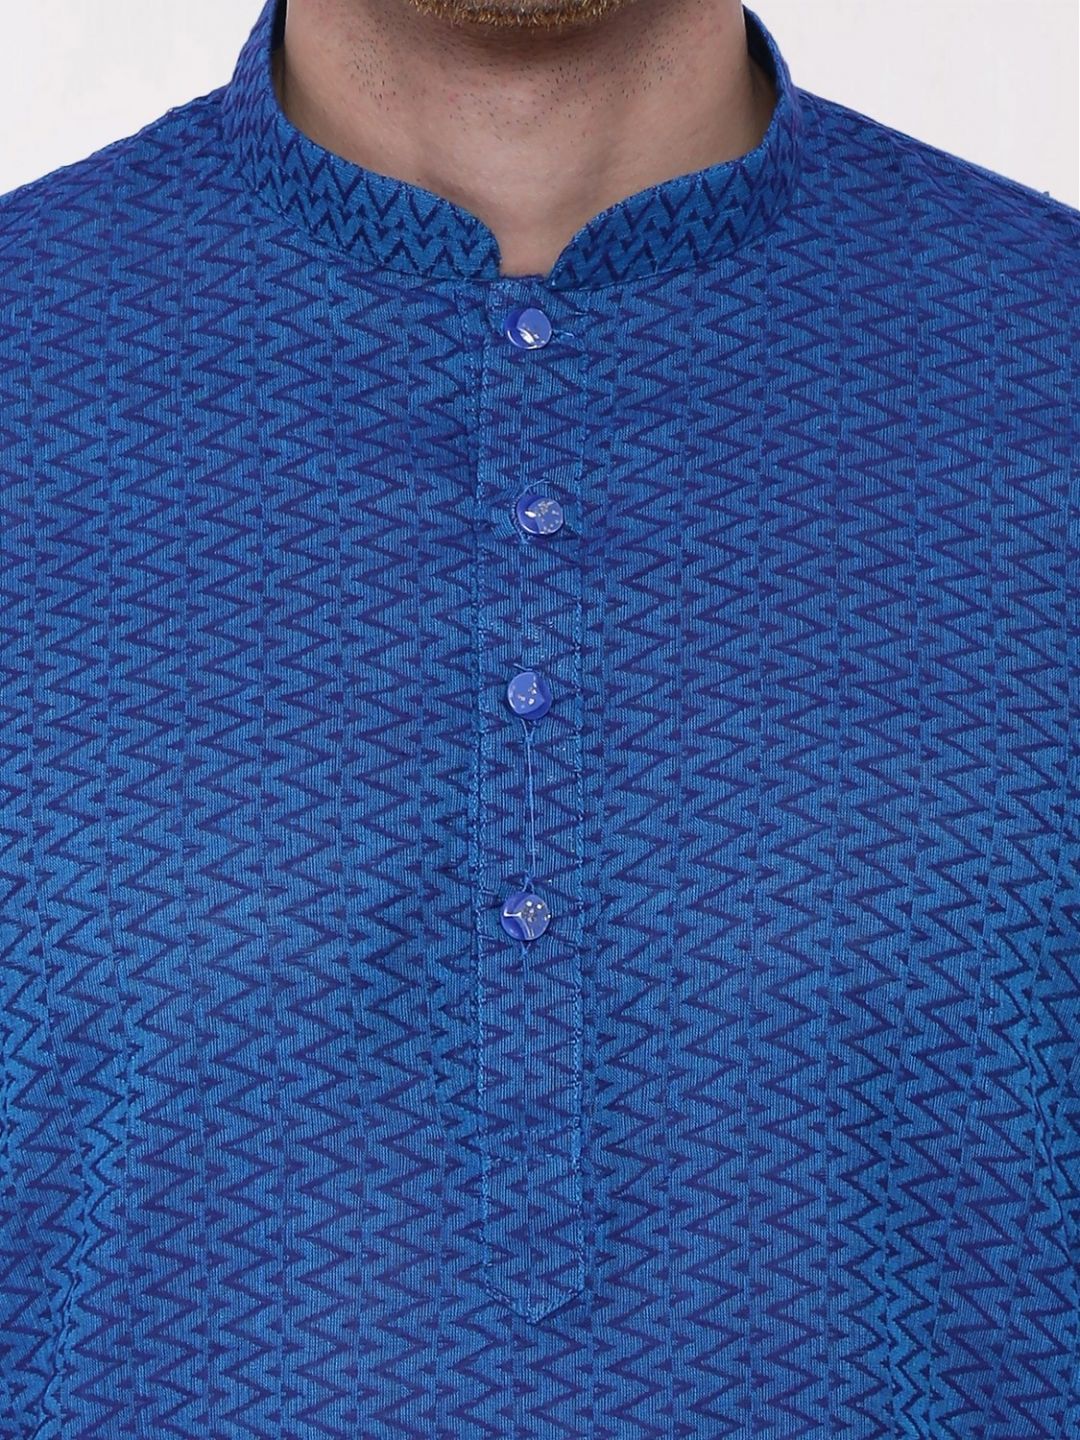 Blue  Woven Design Handloom Cotton Kurta